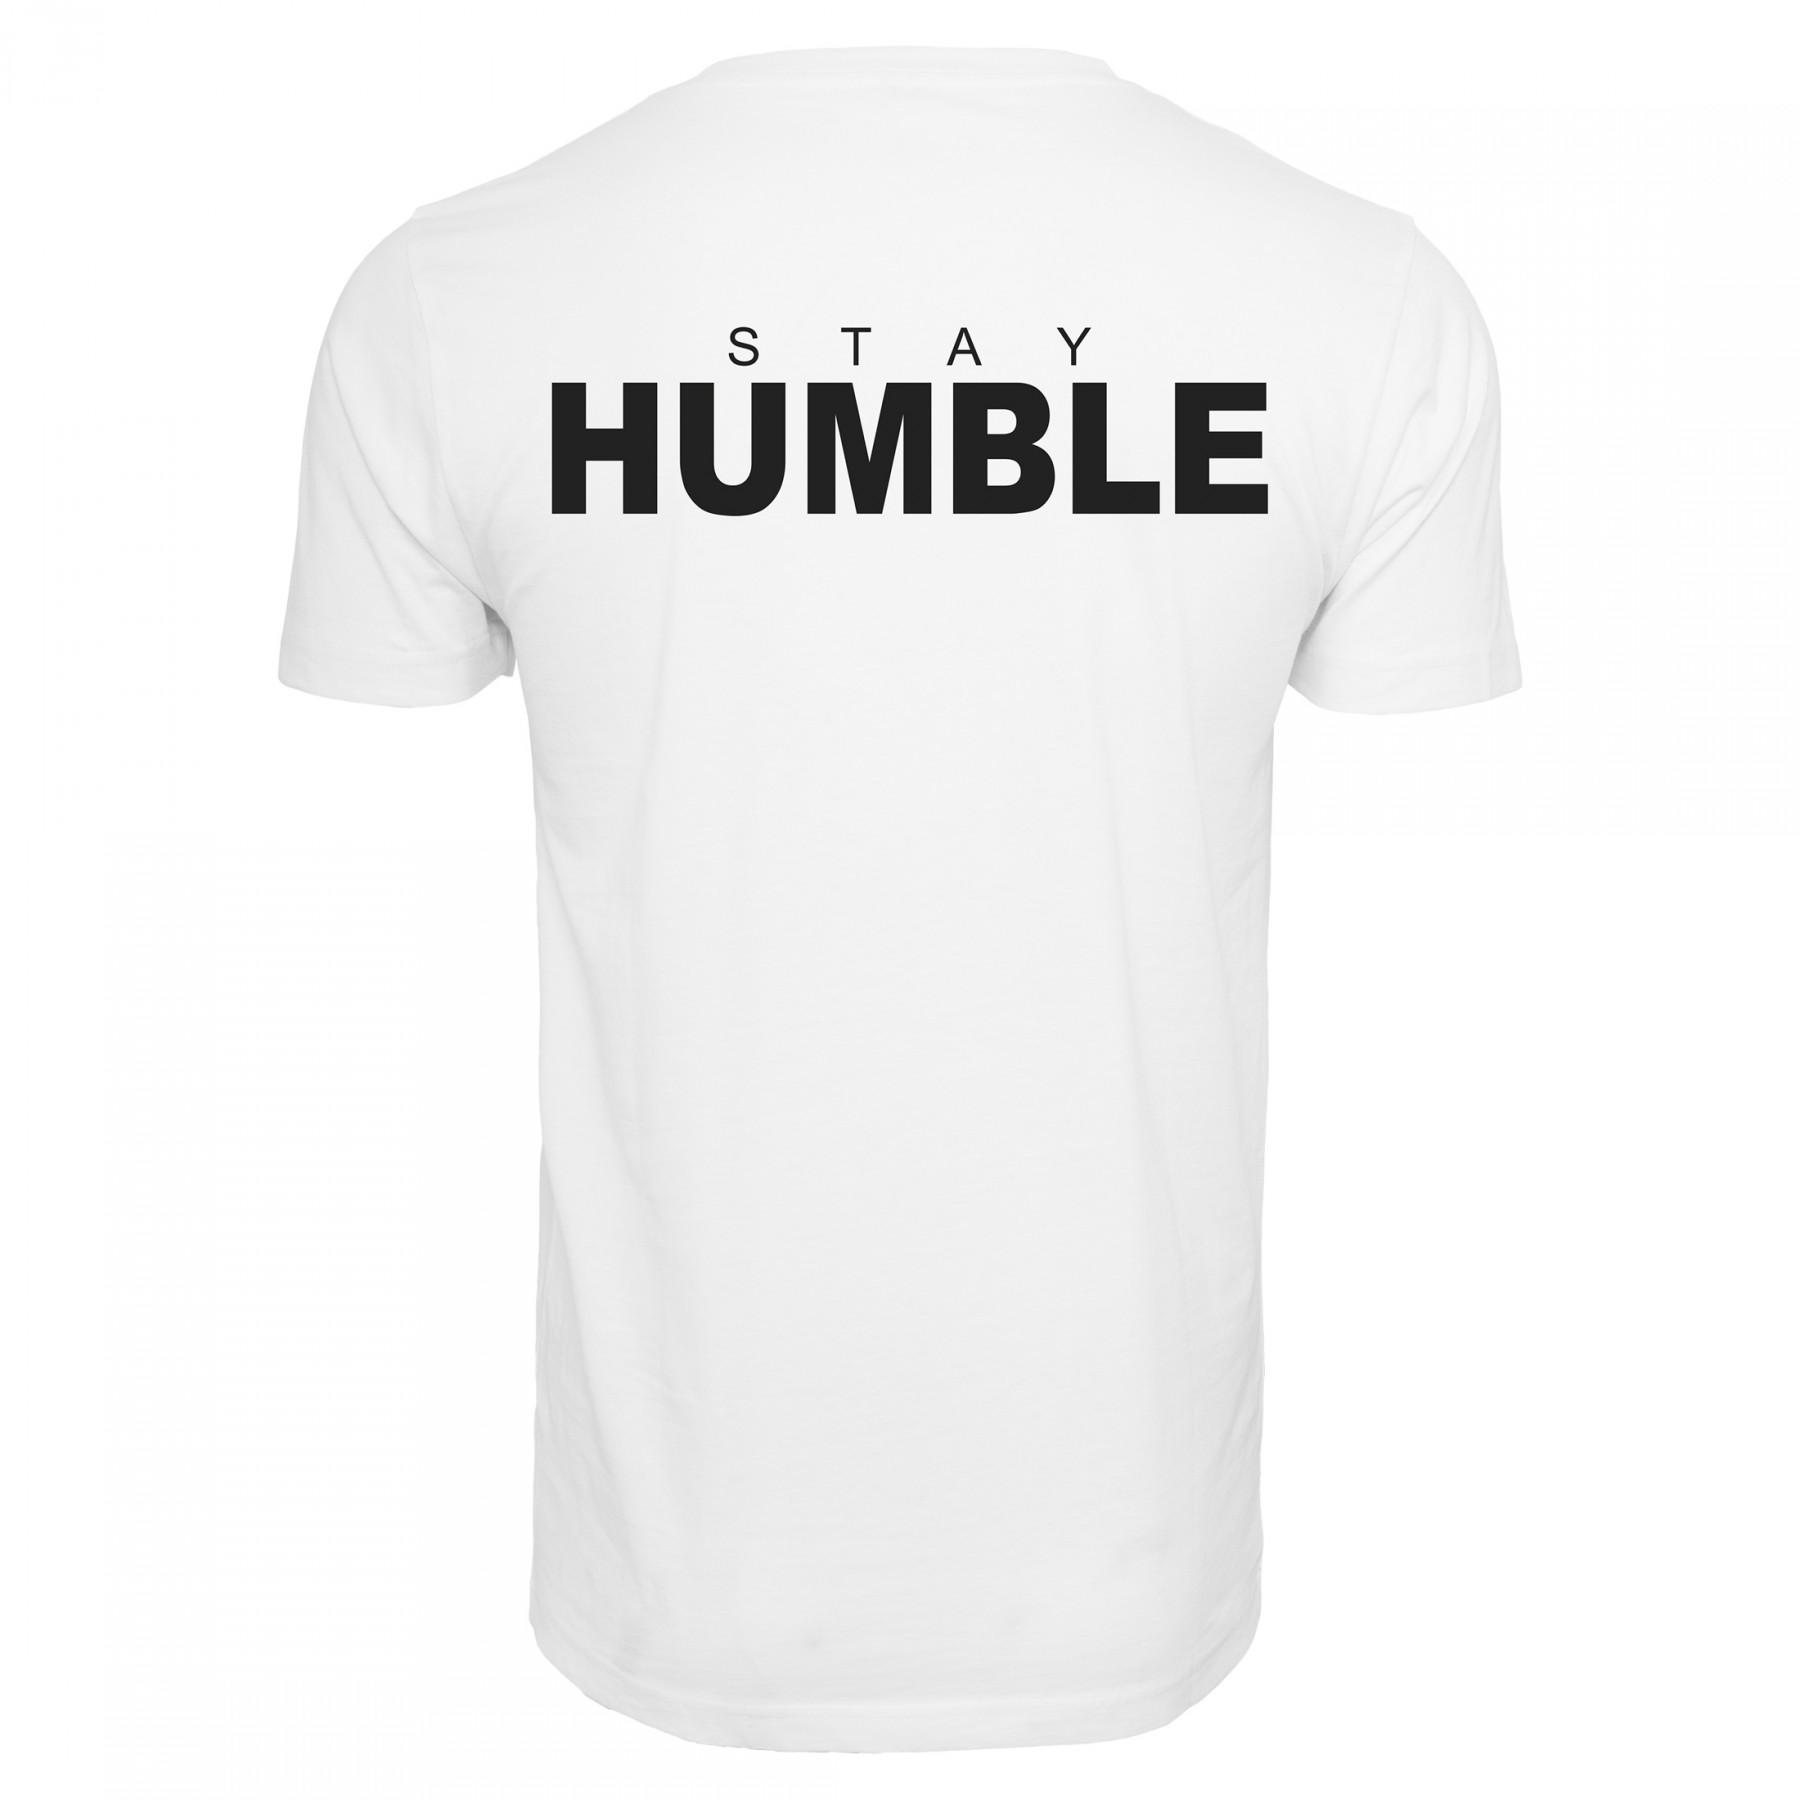 T-shirt Mister Tee humble